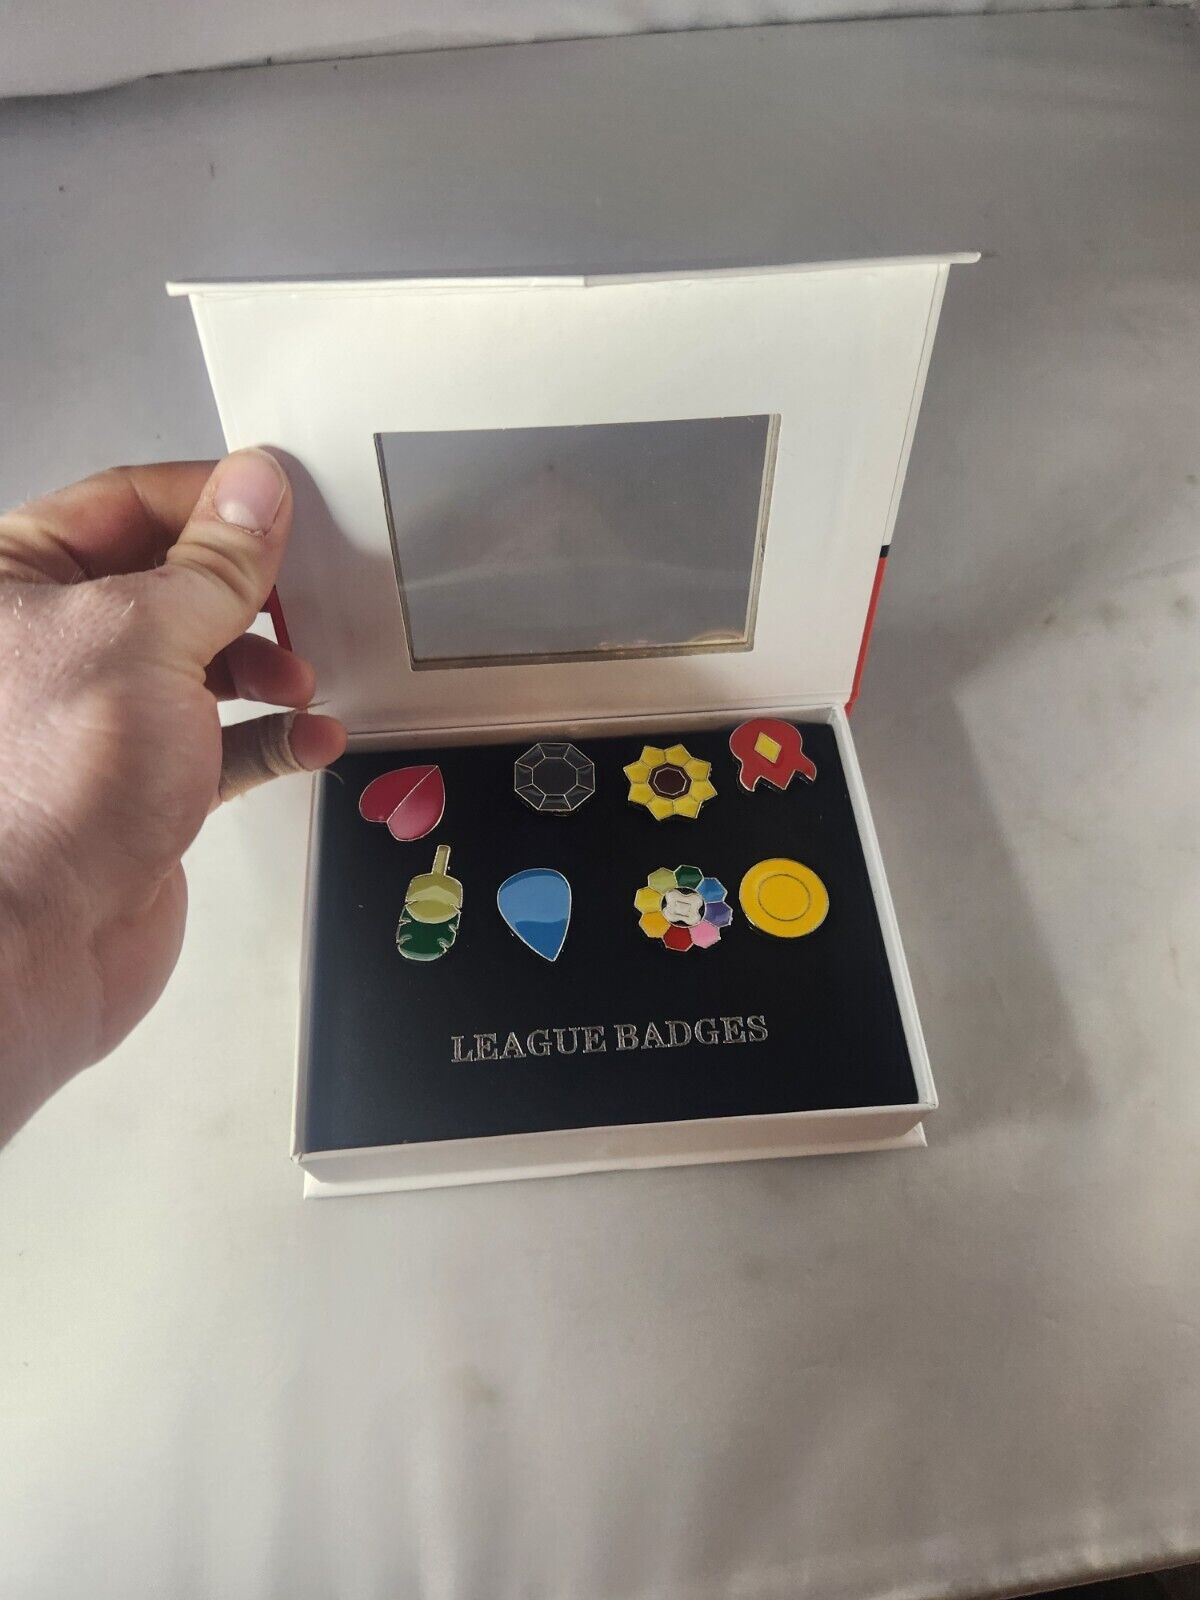 Pokemon Kanto Gen 1 Badges - All 8 Badges in display box